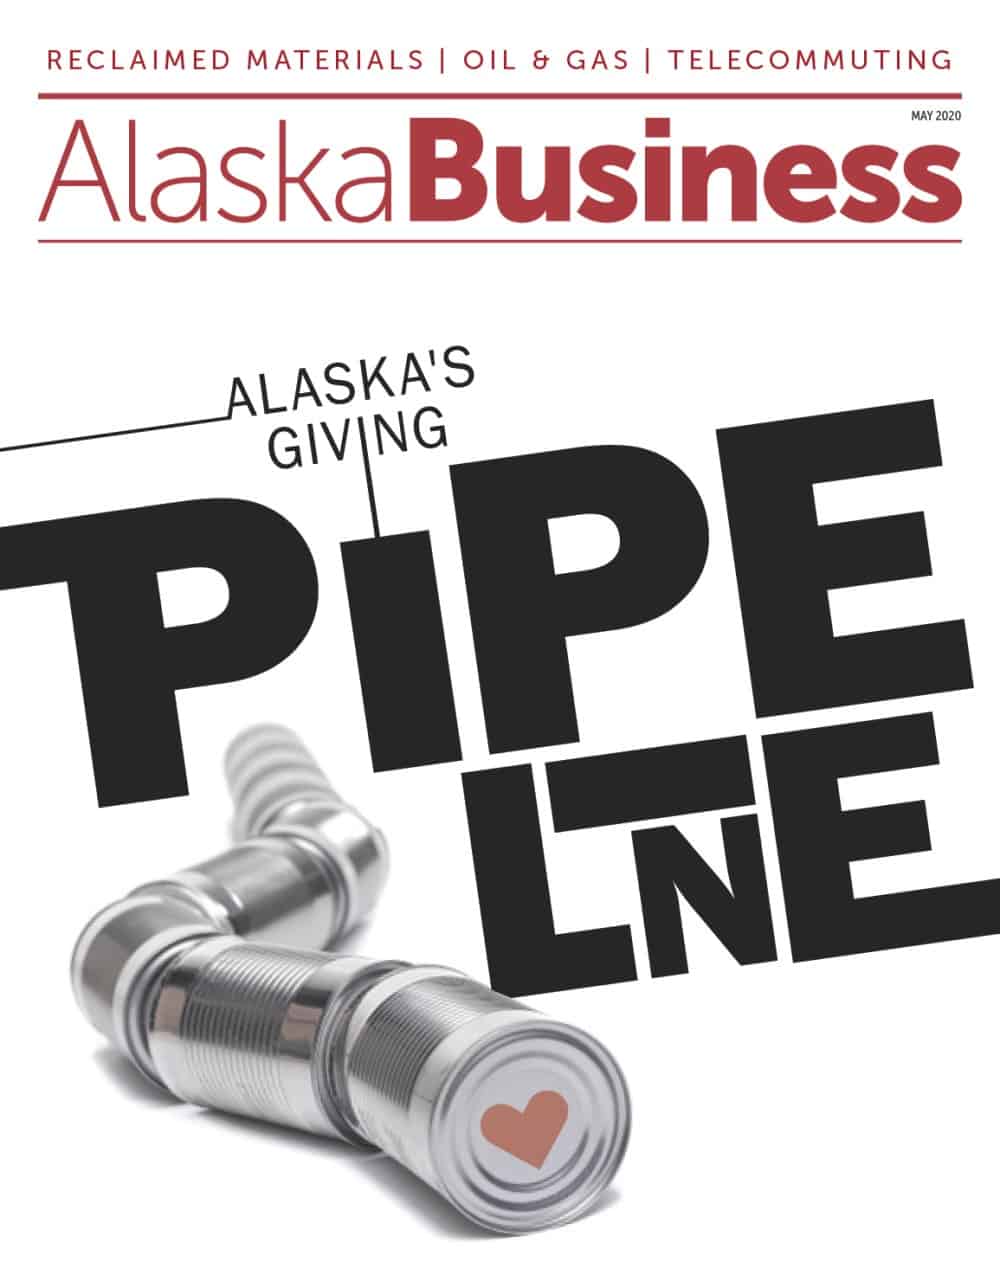 Alaska Business Magazine May 2020 cover